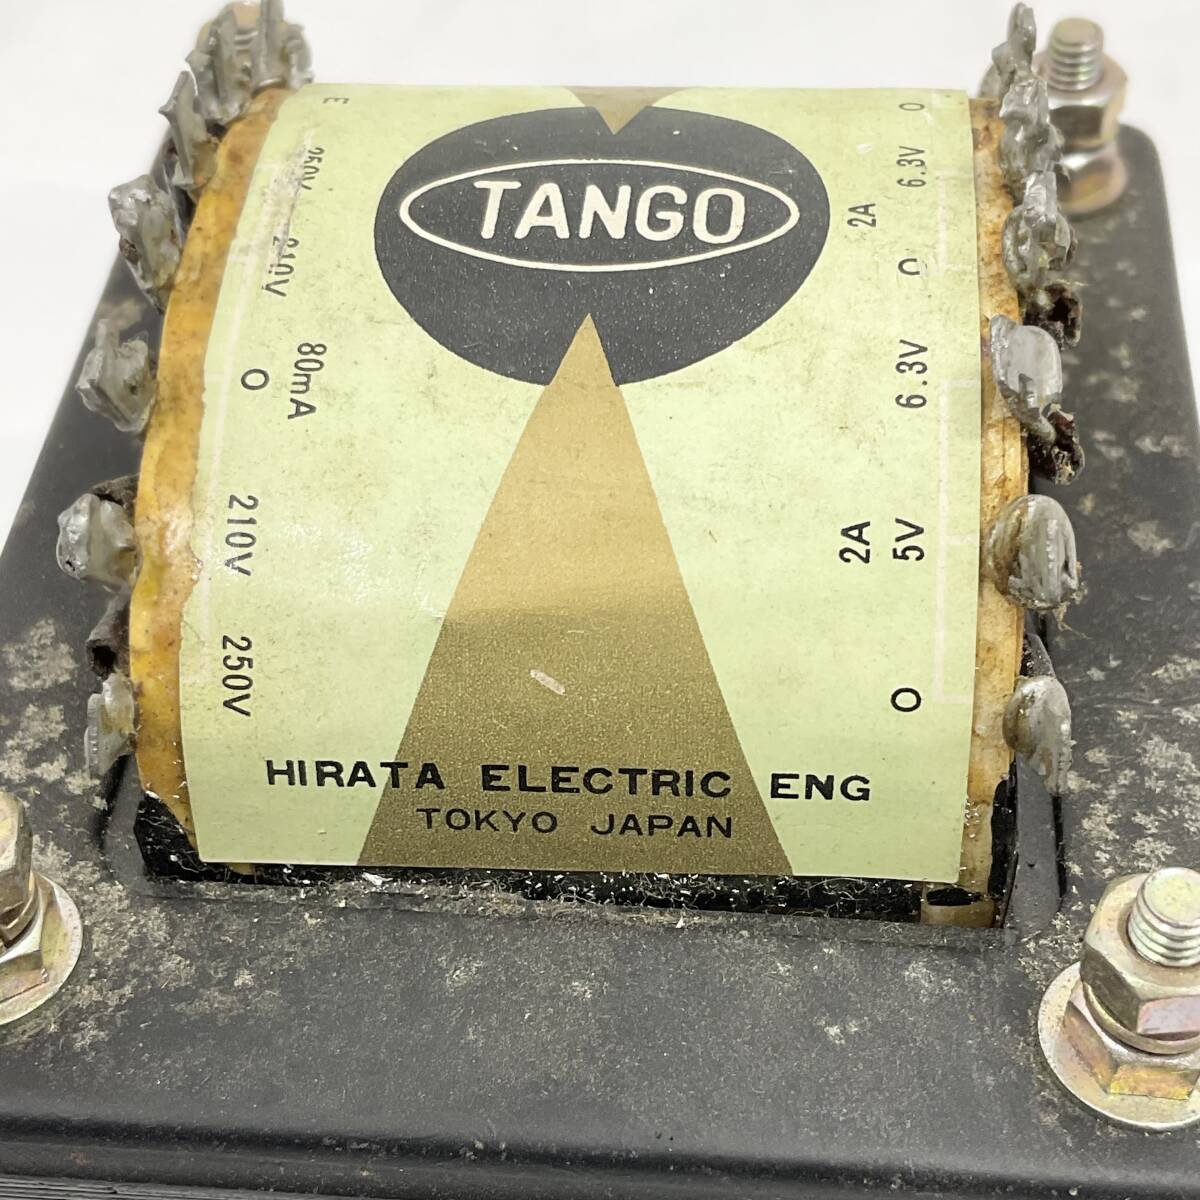  old tango ( flat rice field ) power supply trance TANGO PH-80 operation not yet verification HIRATA ELECTRIC ENG TOKYO JAPAN(C1194)